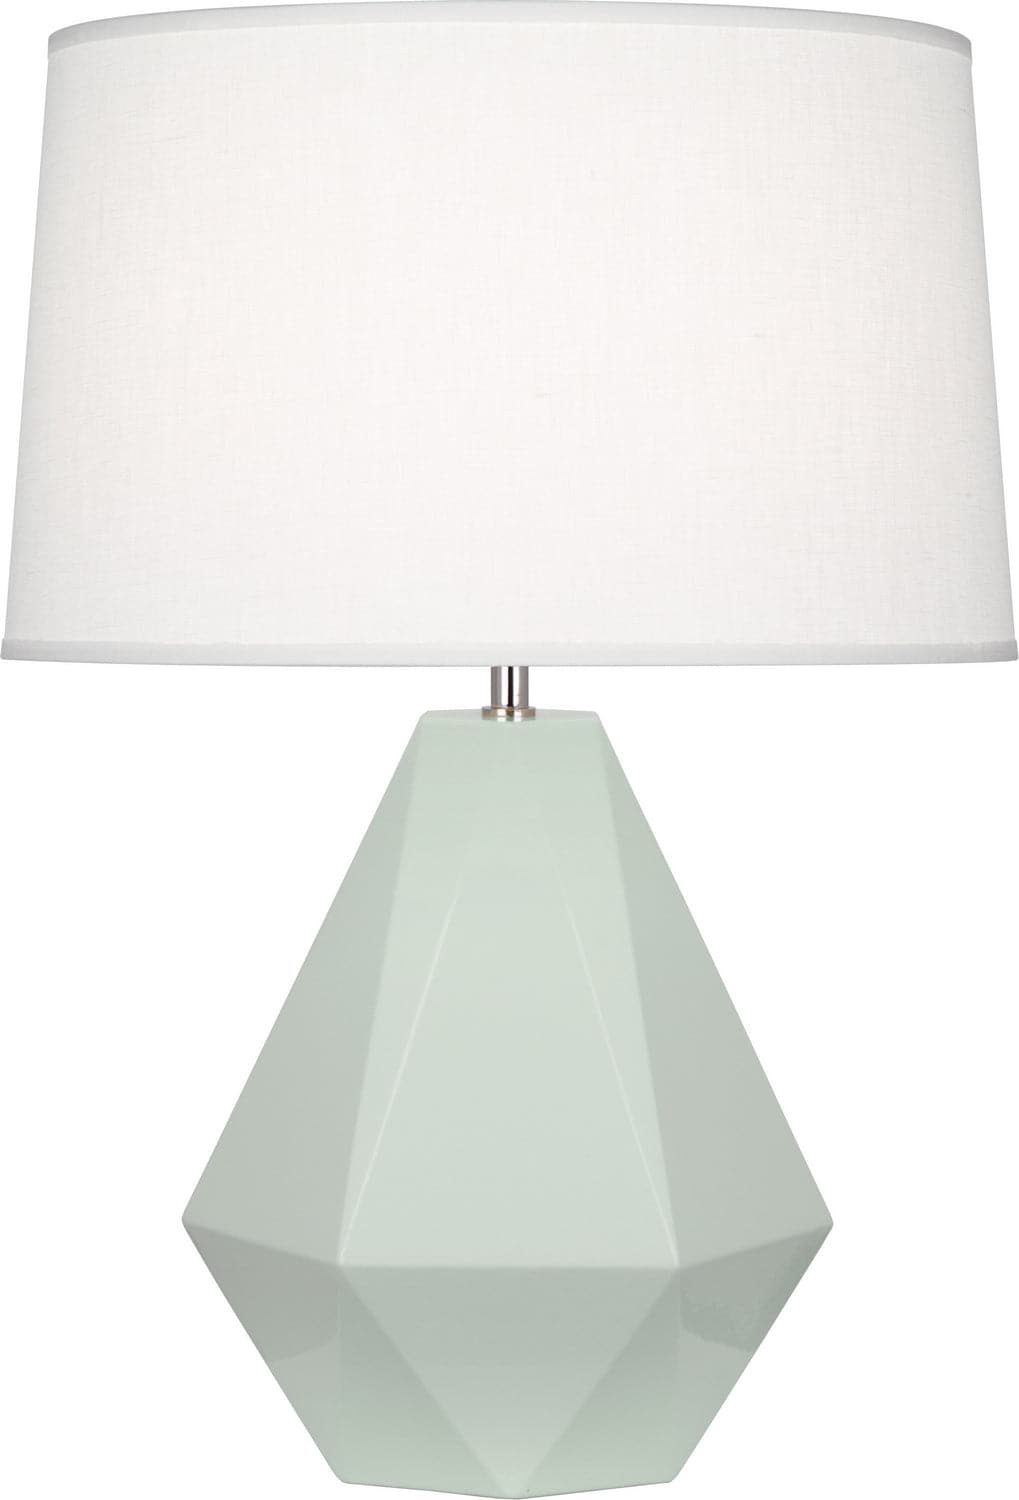 Robert Abbey - 947 - One Light Table Lamp - Delta - Celadon Glazed w/Polished Nickel